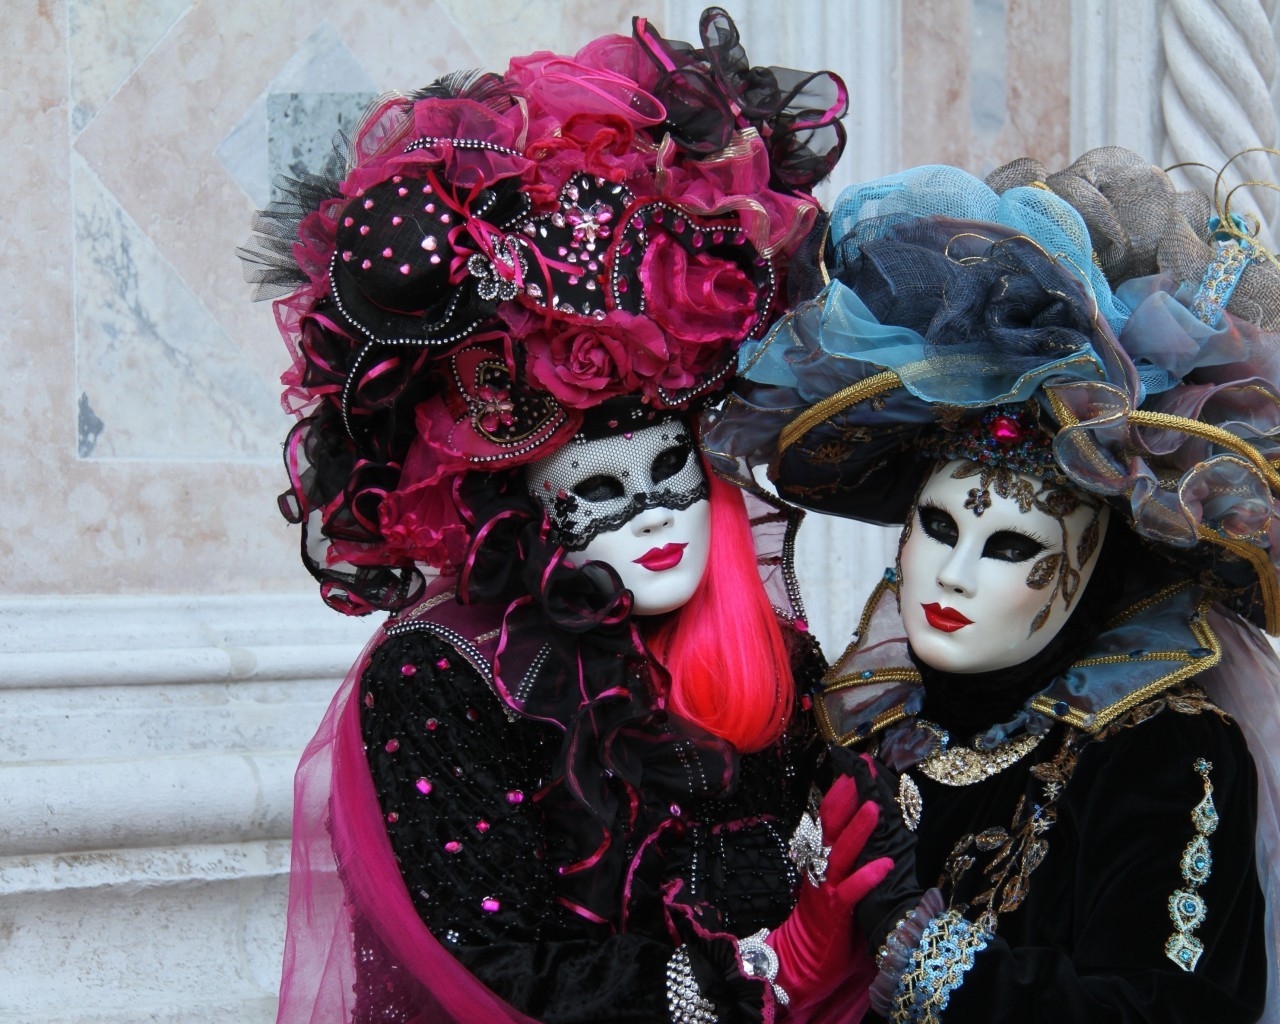 Venice Carnival for 1280 x 1024 resolution